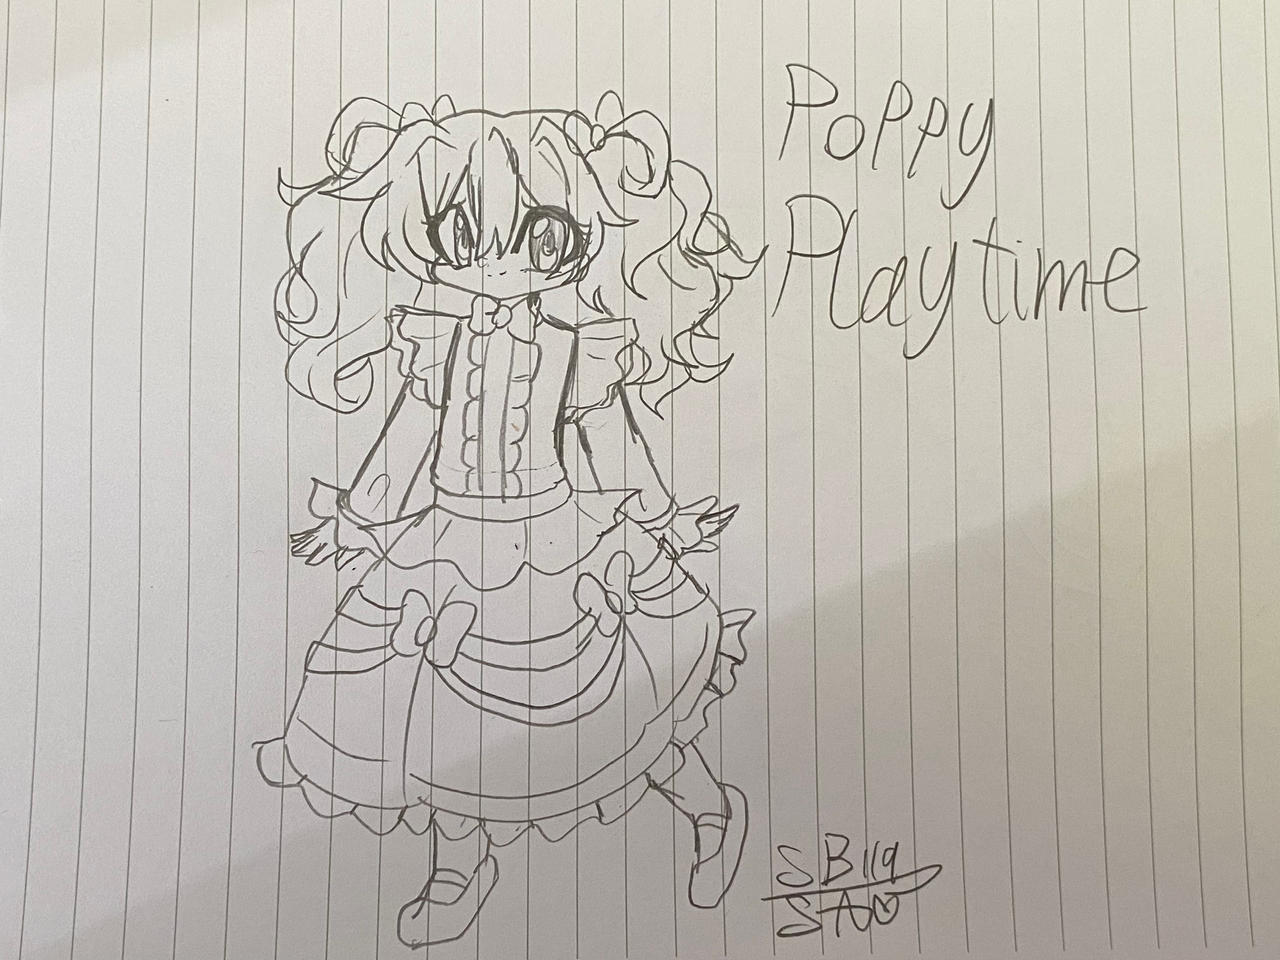 Poppy Playtime (Old drawing) by SpaceKinaTravel on DeviantArt